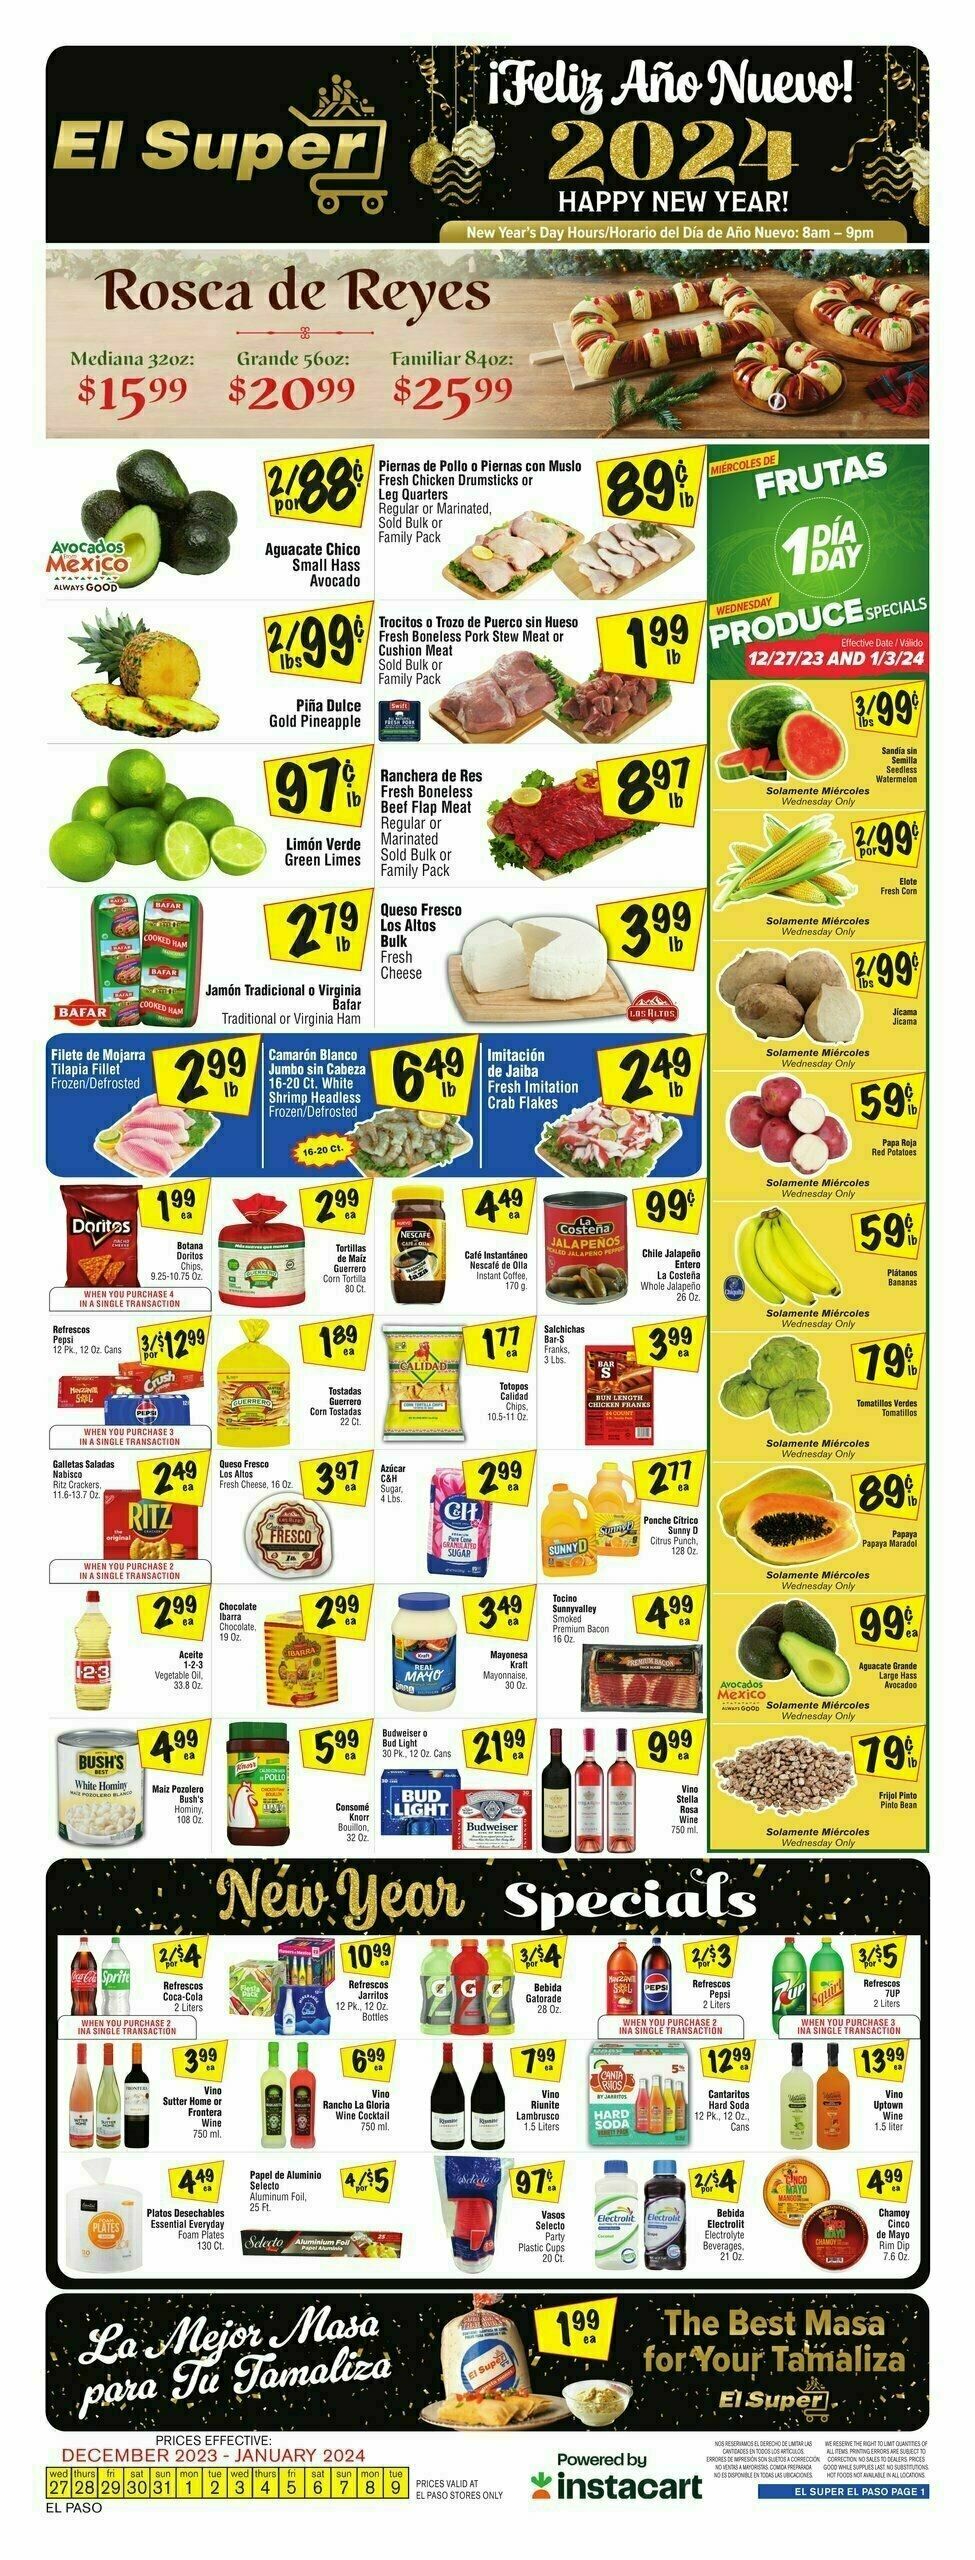 El Super Markets Weekly Ad from December 27